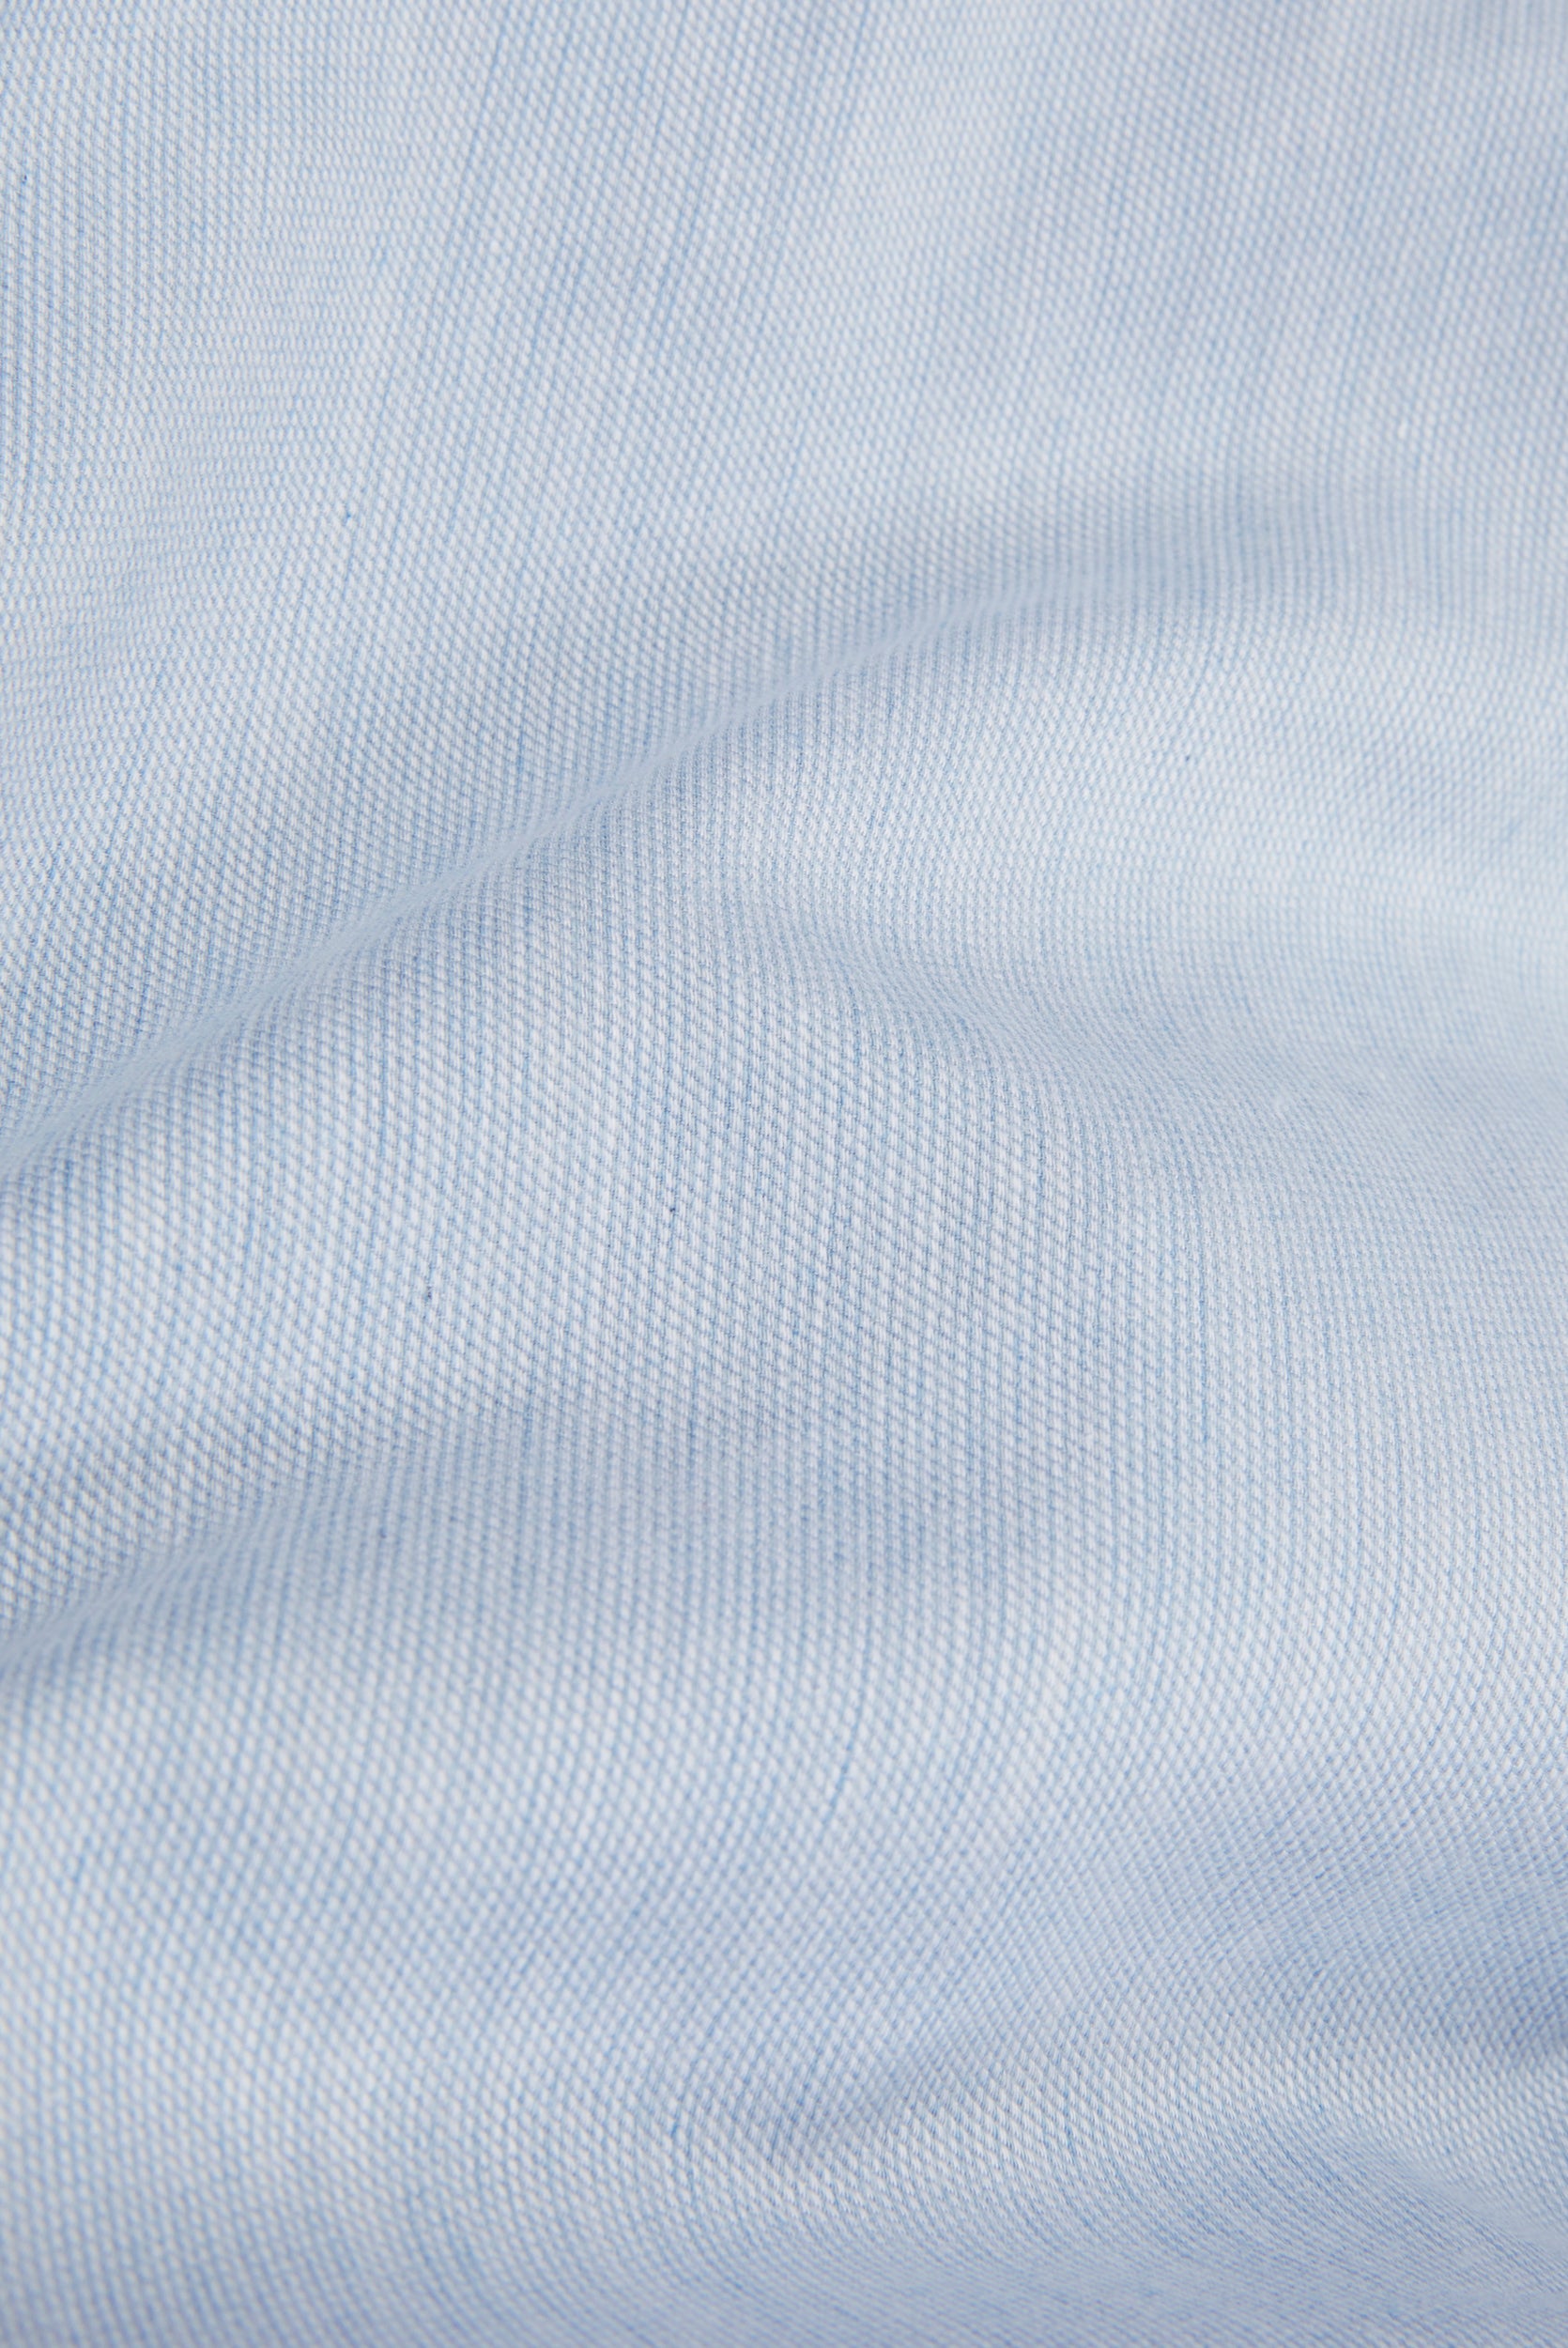 Detail of Fabric of Finamore Napoli Shirt